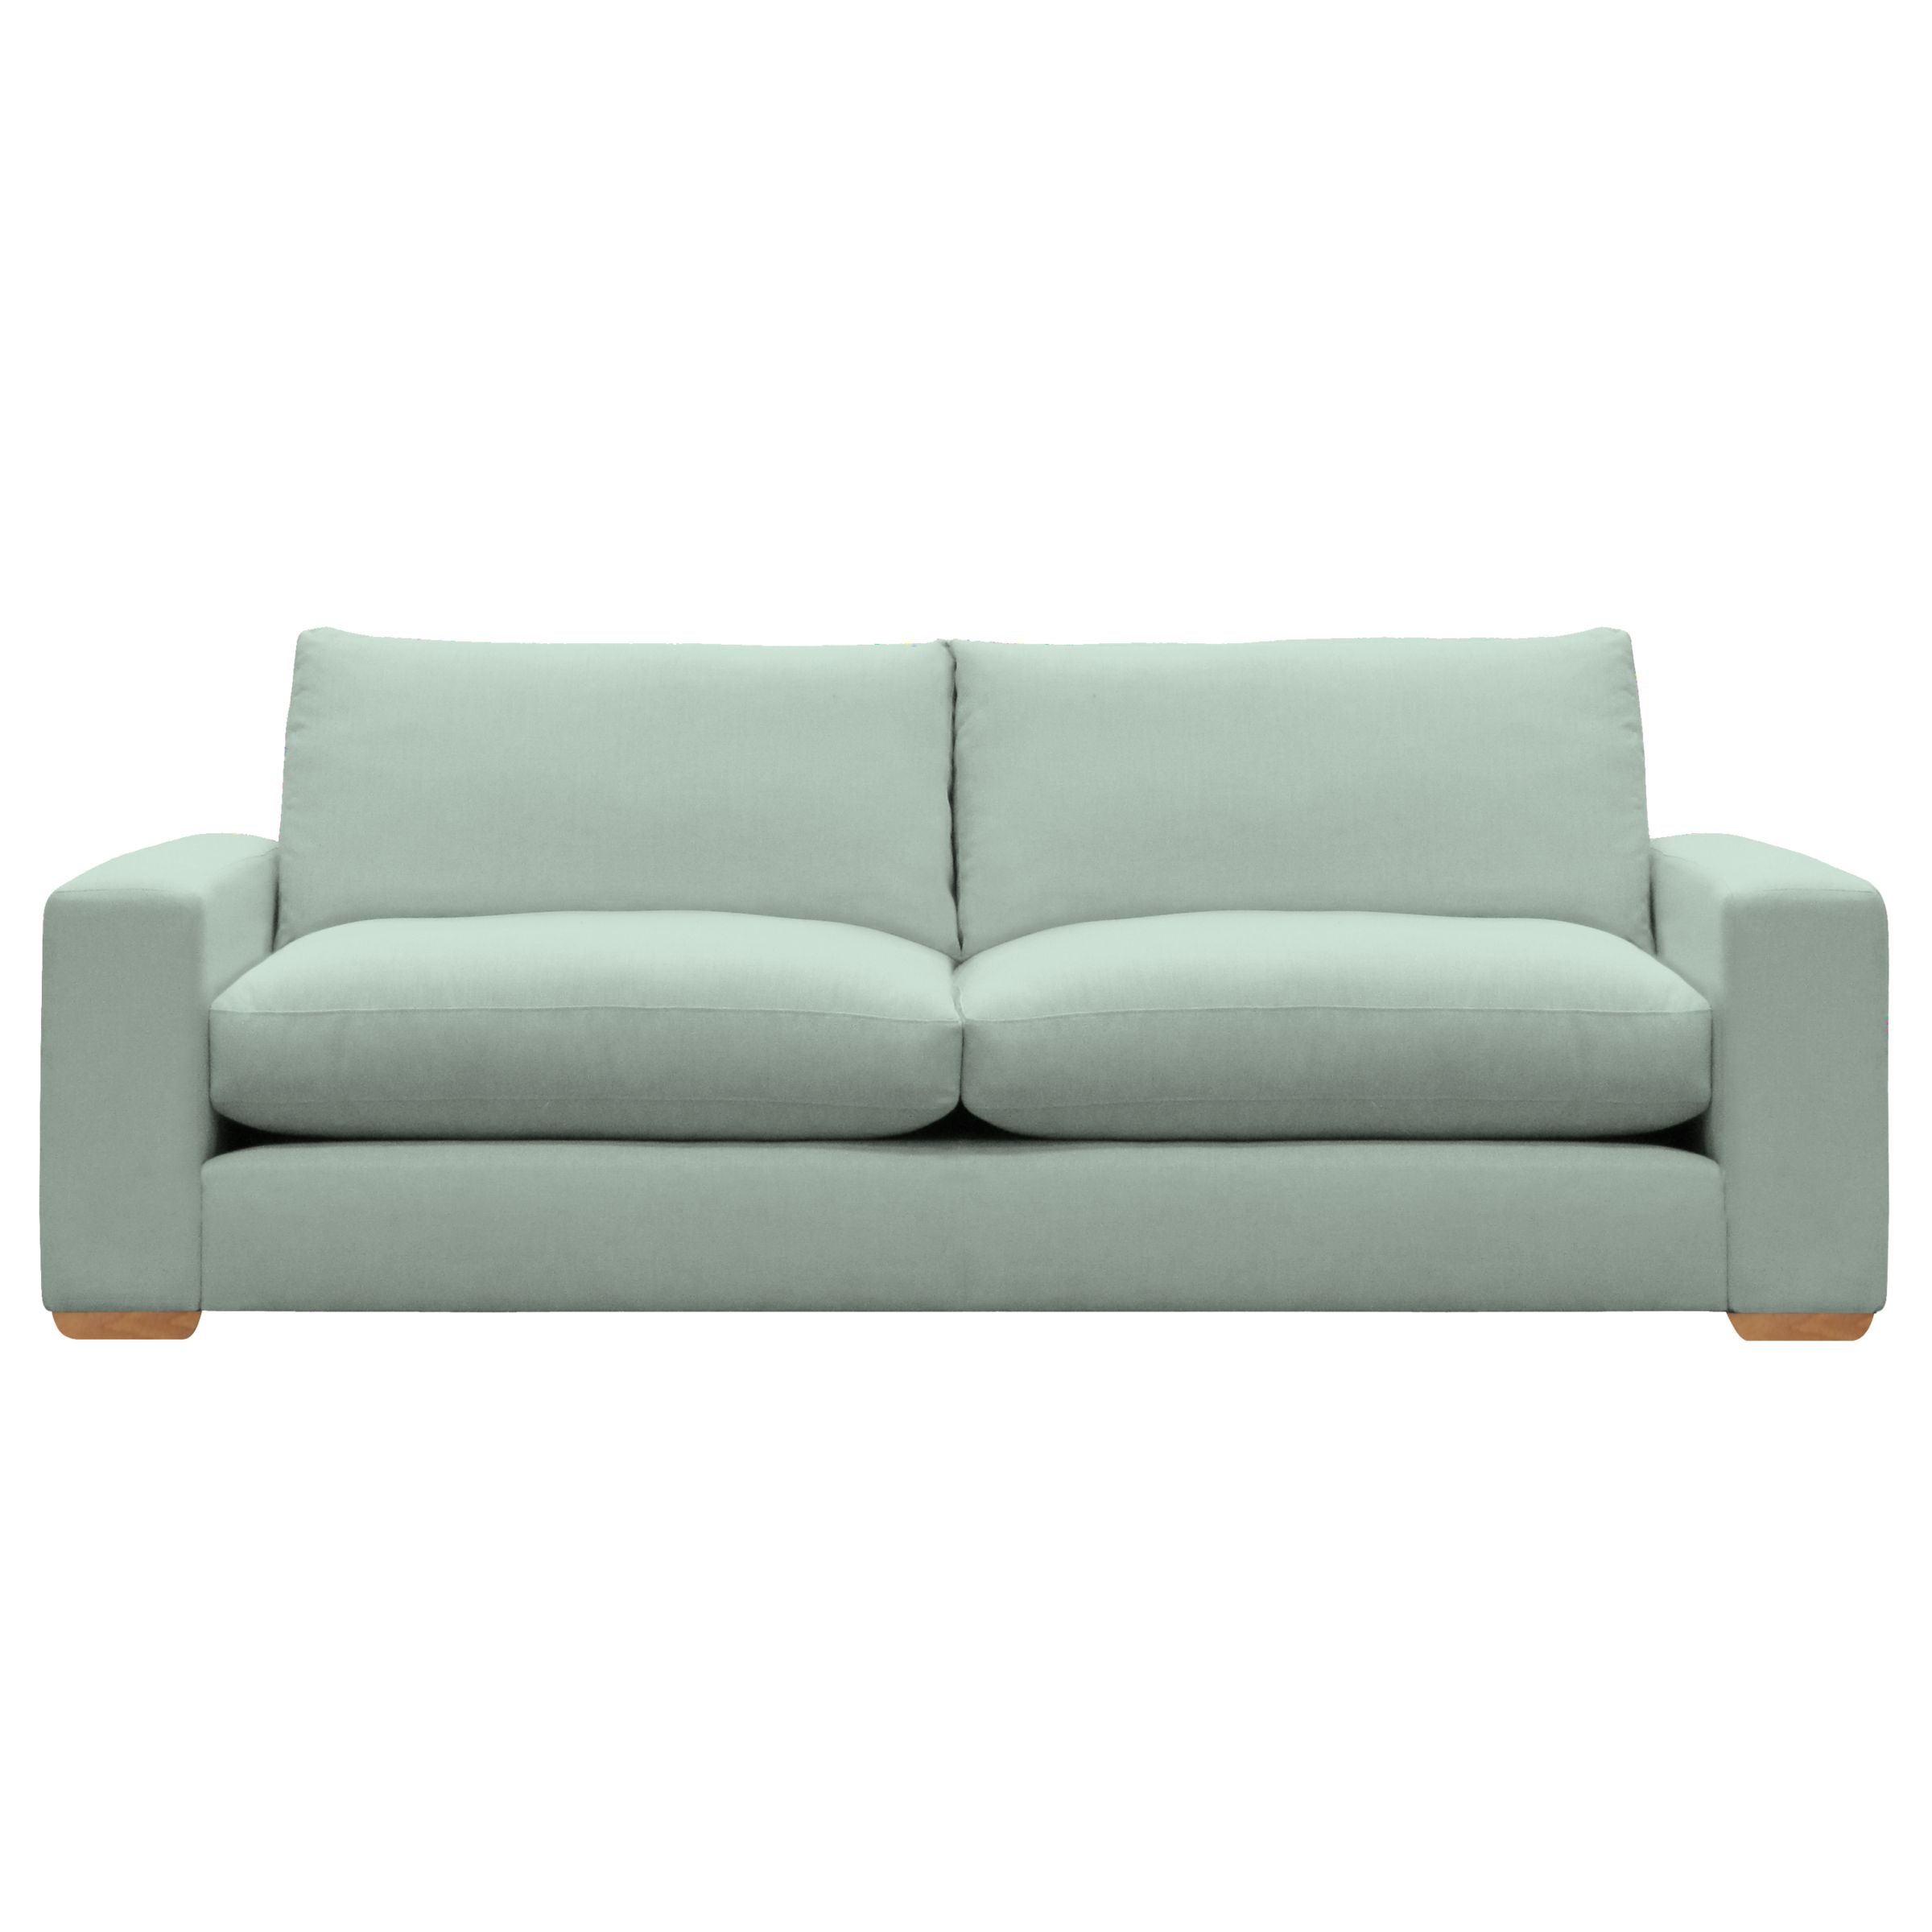 John Lewis Options Wide Arm Grand Sofa, Eaton Duck Egg, width 225cm